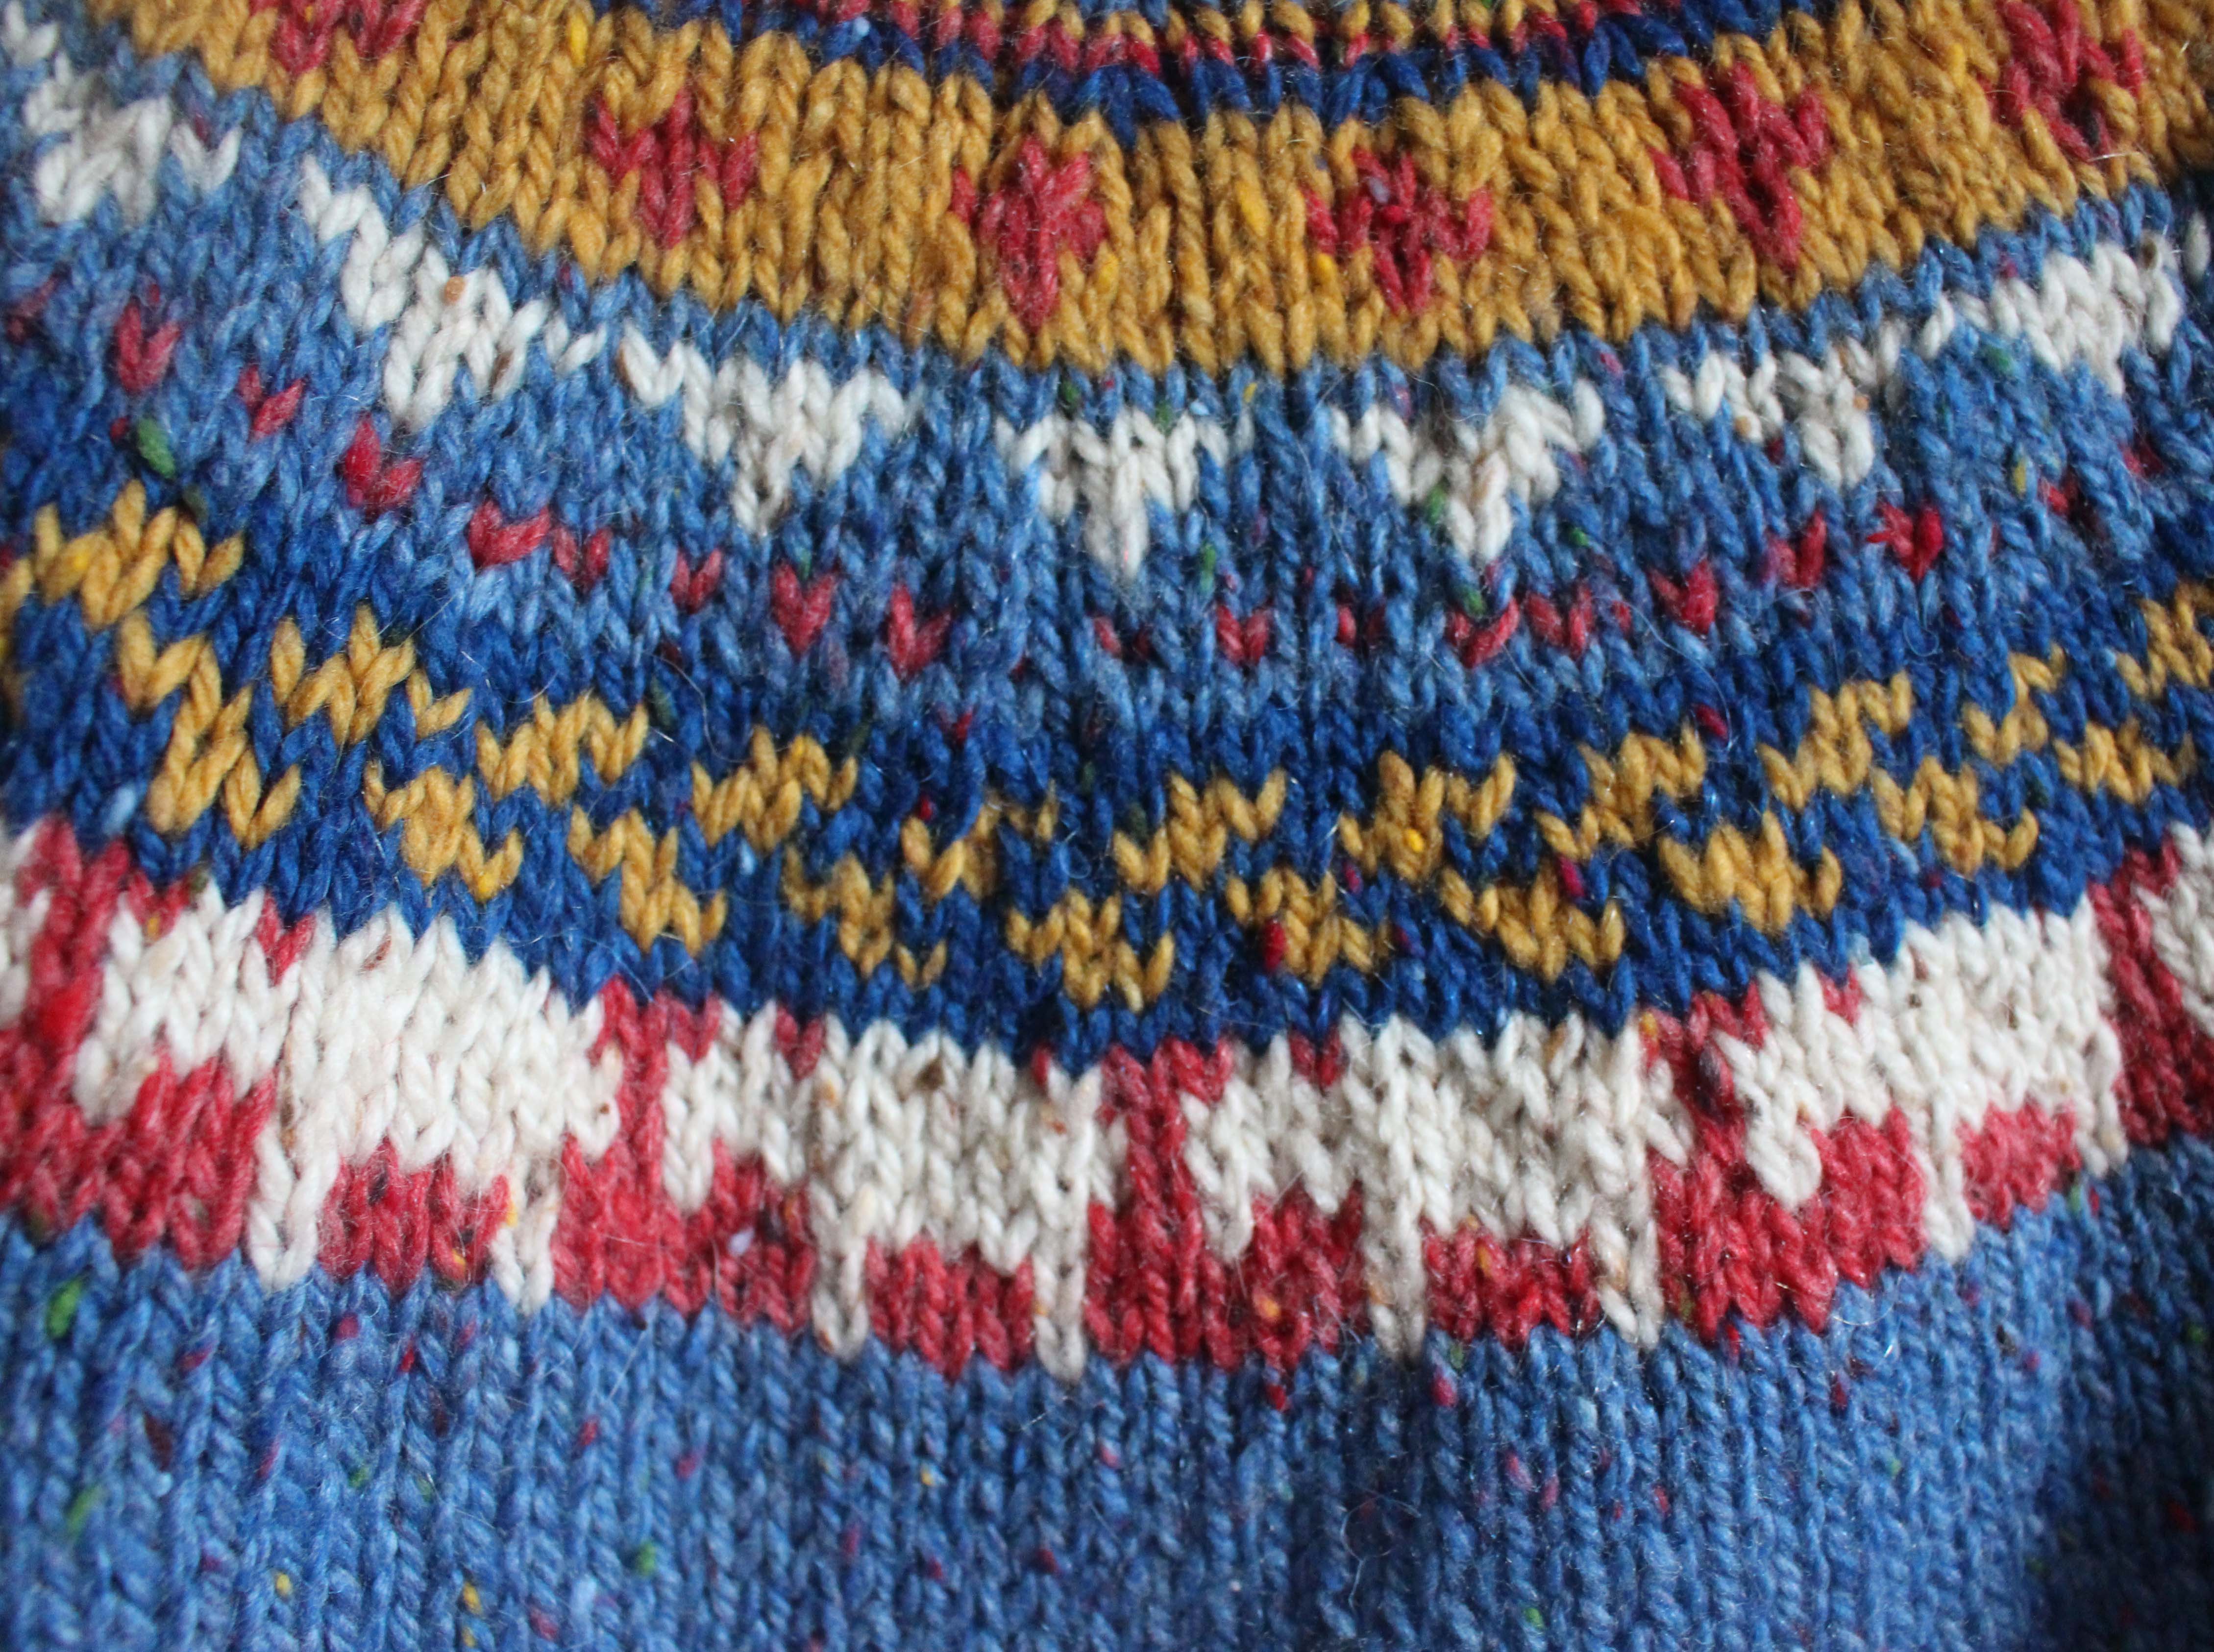 Knitting pattern - sheep fairisle